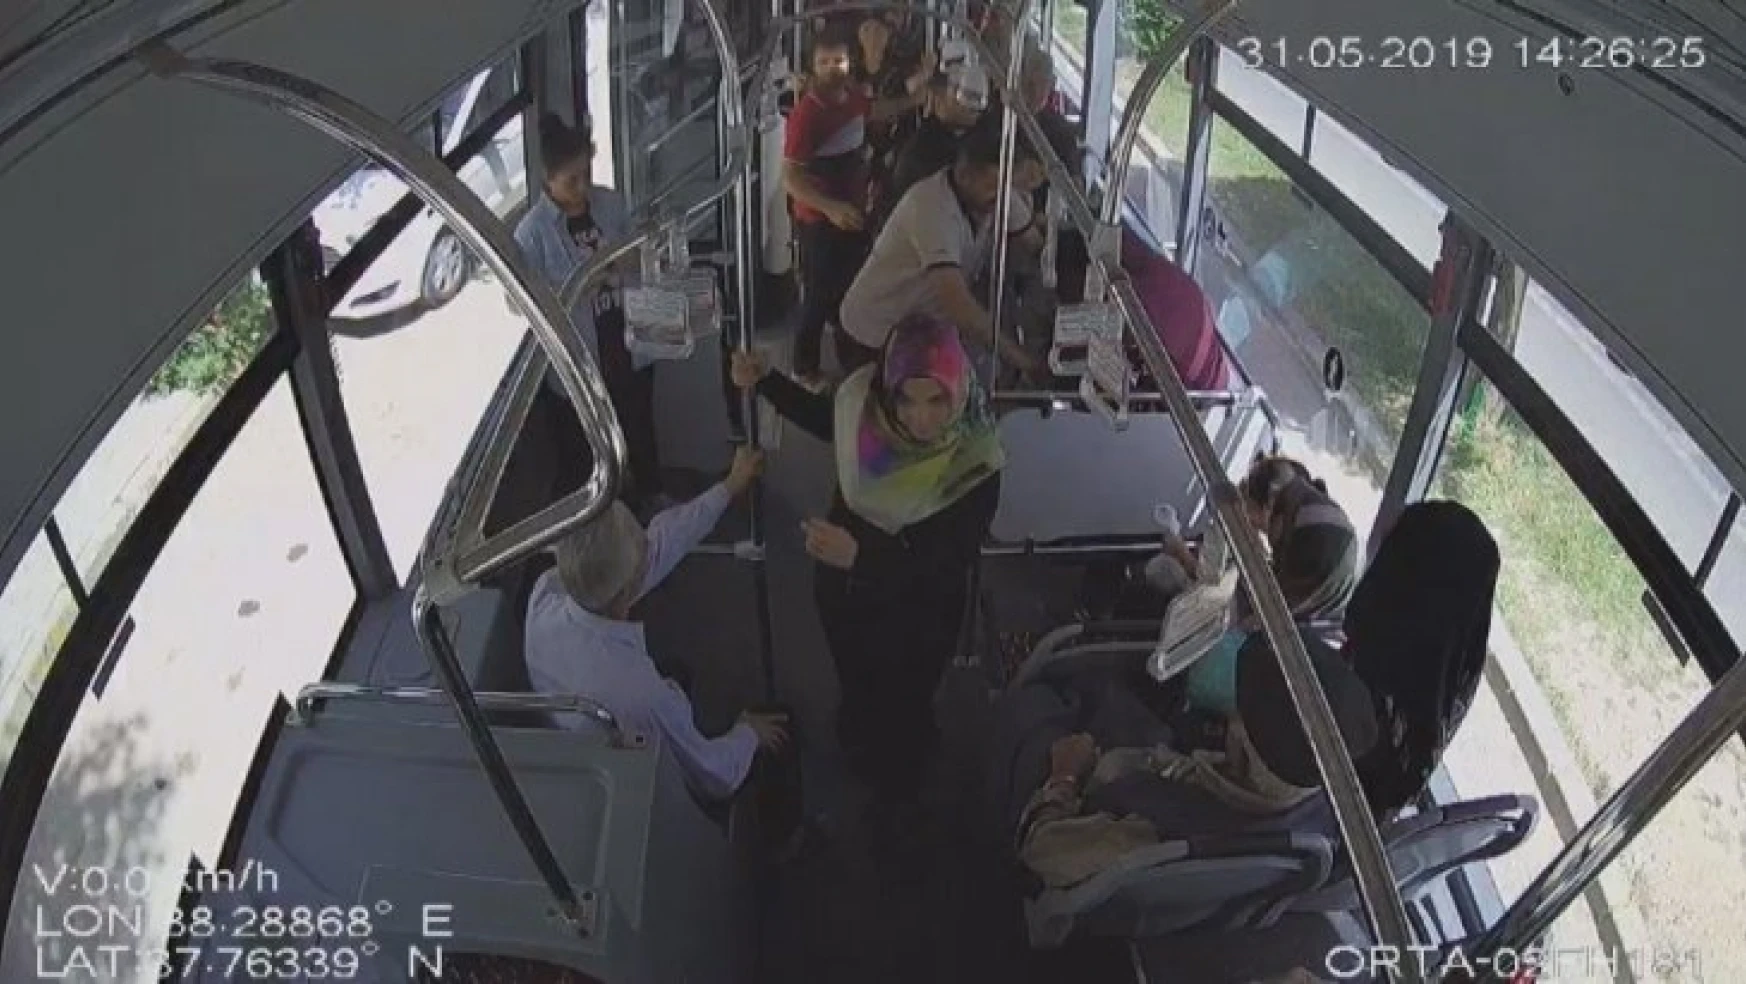 Otobüste yolcular yumruk yumruğa birbirine girdi